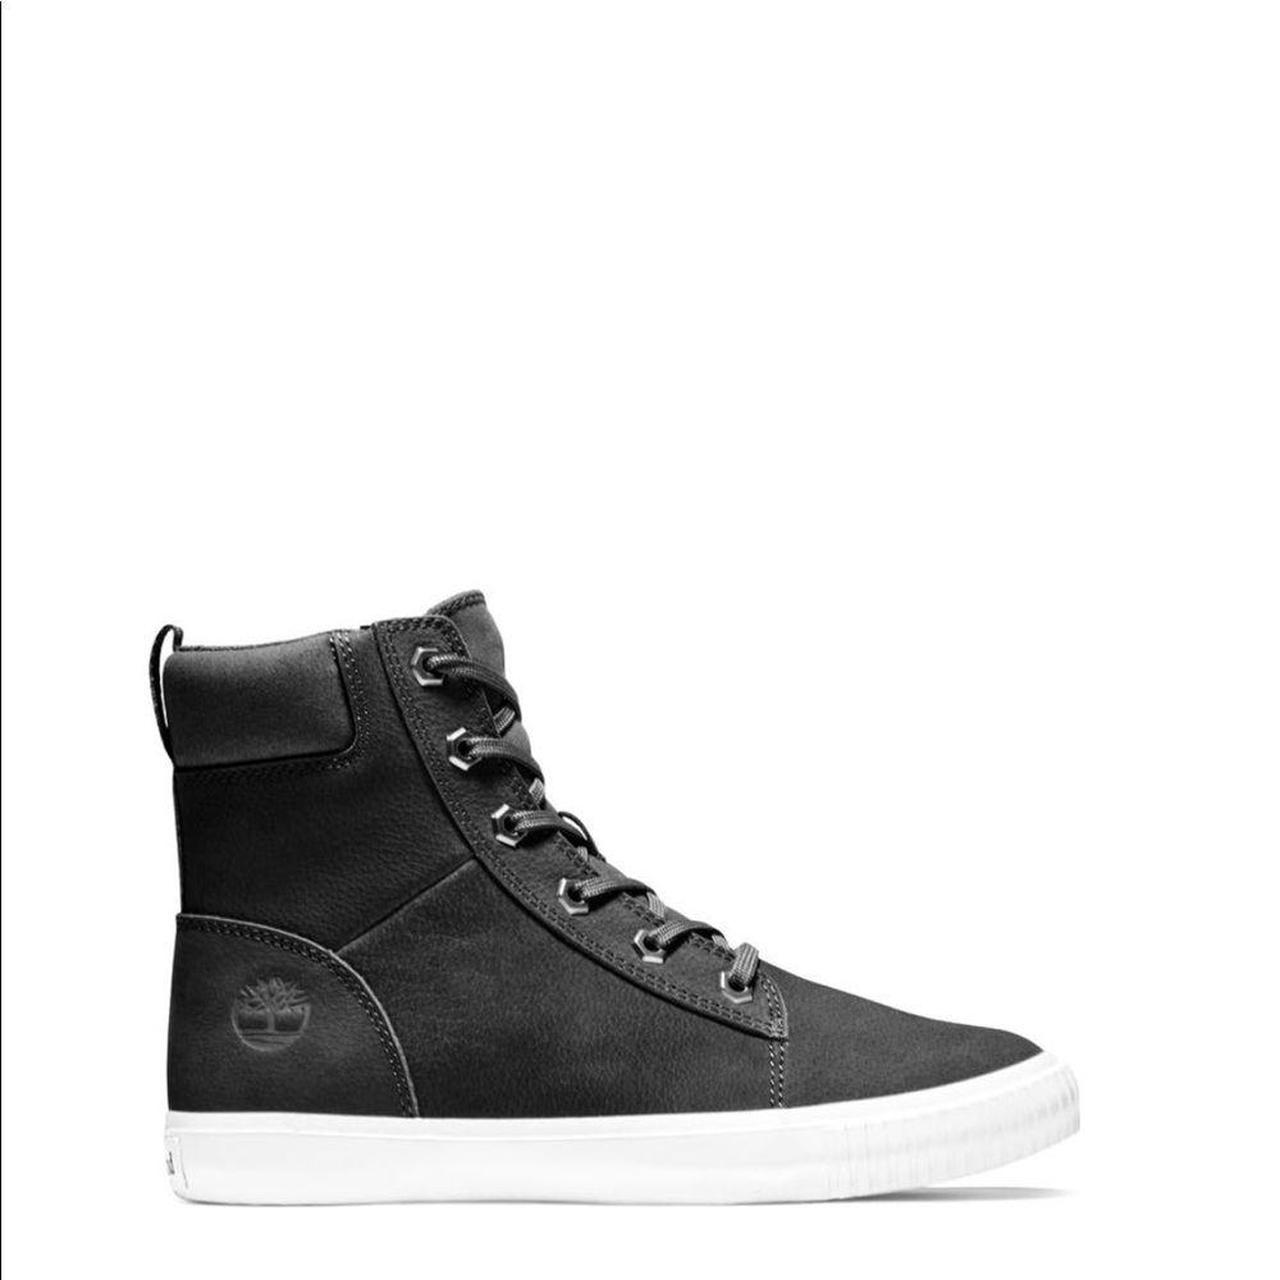 Product Image 2 - TIMBERLAND Skyla Bay Sneaker Boot
Size: